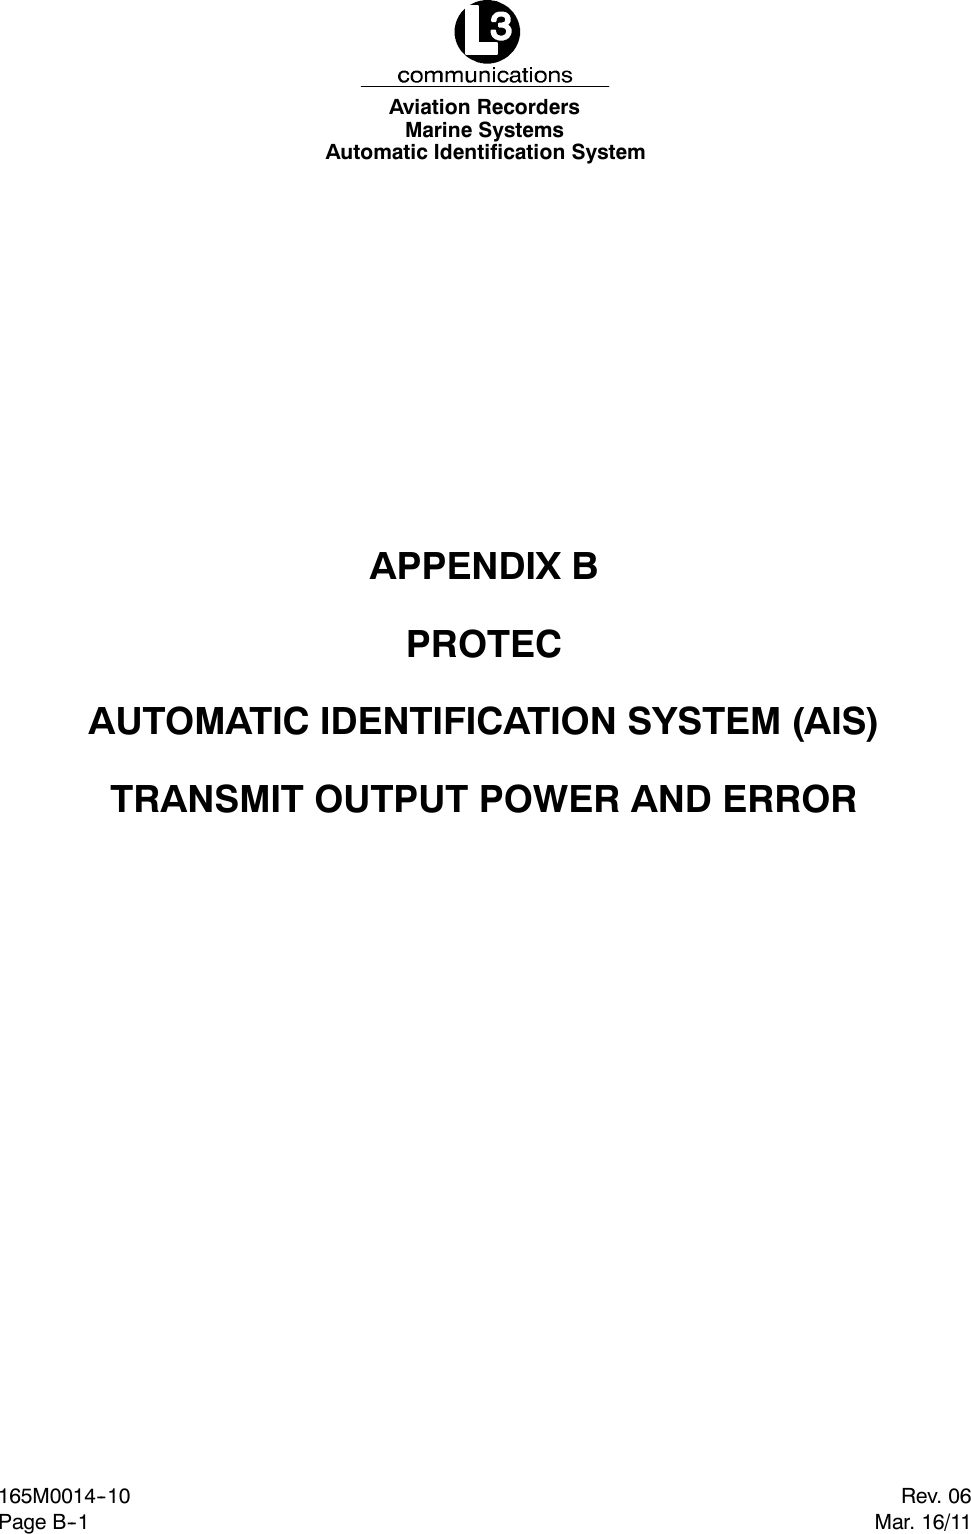 Marine SystemsAviation RecordersAutomatic Identification SystemPage B--1Rev. 06165M0014--10Mar. 16/11APPENDIX BPROTECAUTOMATIC IDENTIFICATION SYSTEM (AIS)TRANSMIT OUTPUT POWER AND ERROR